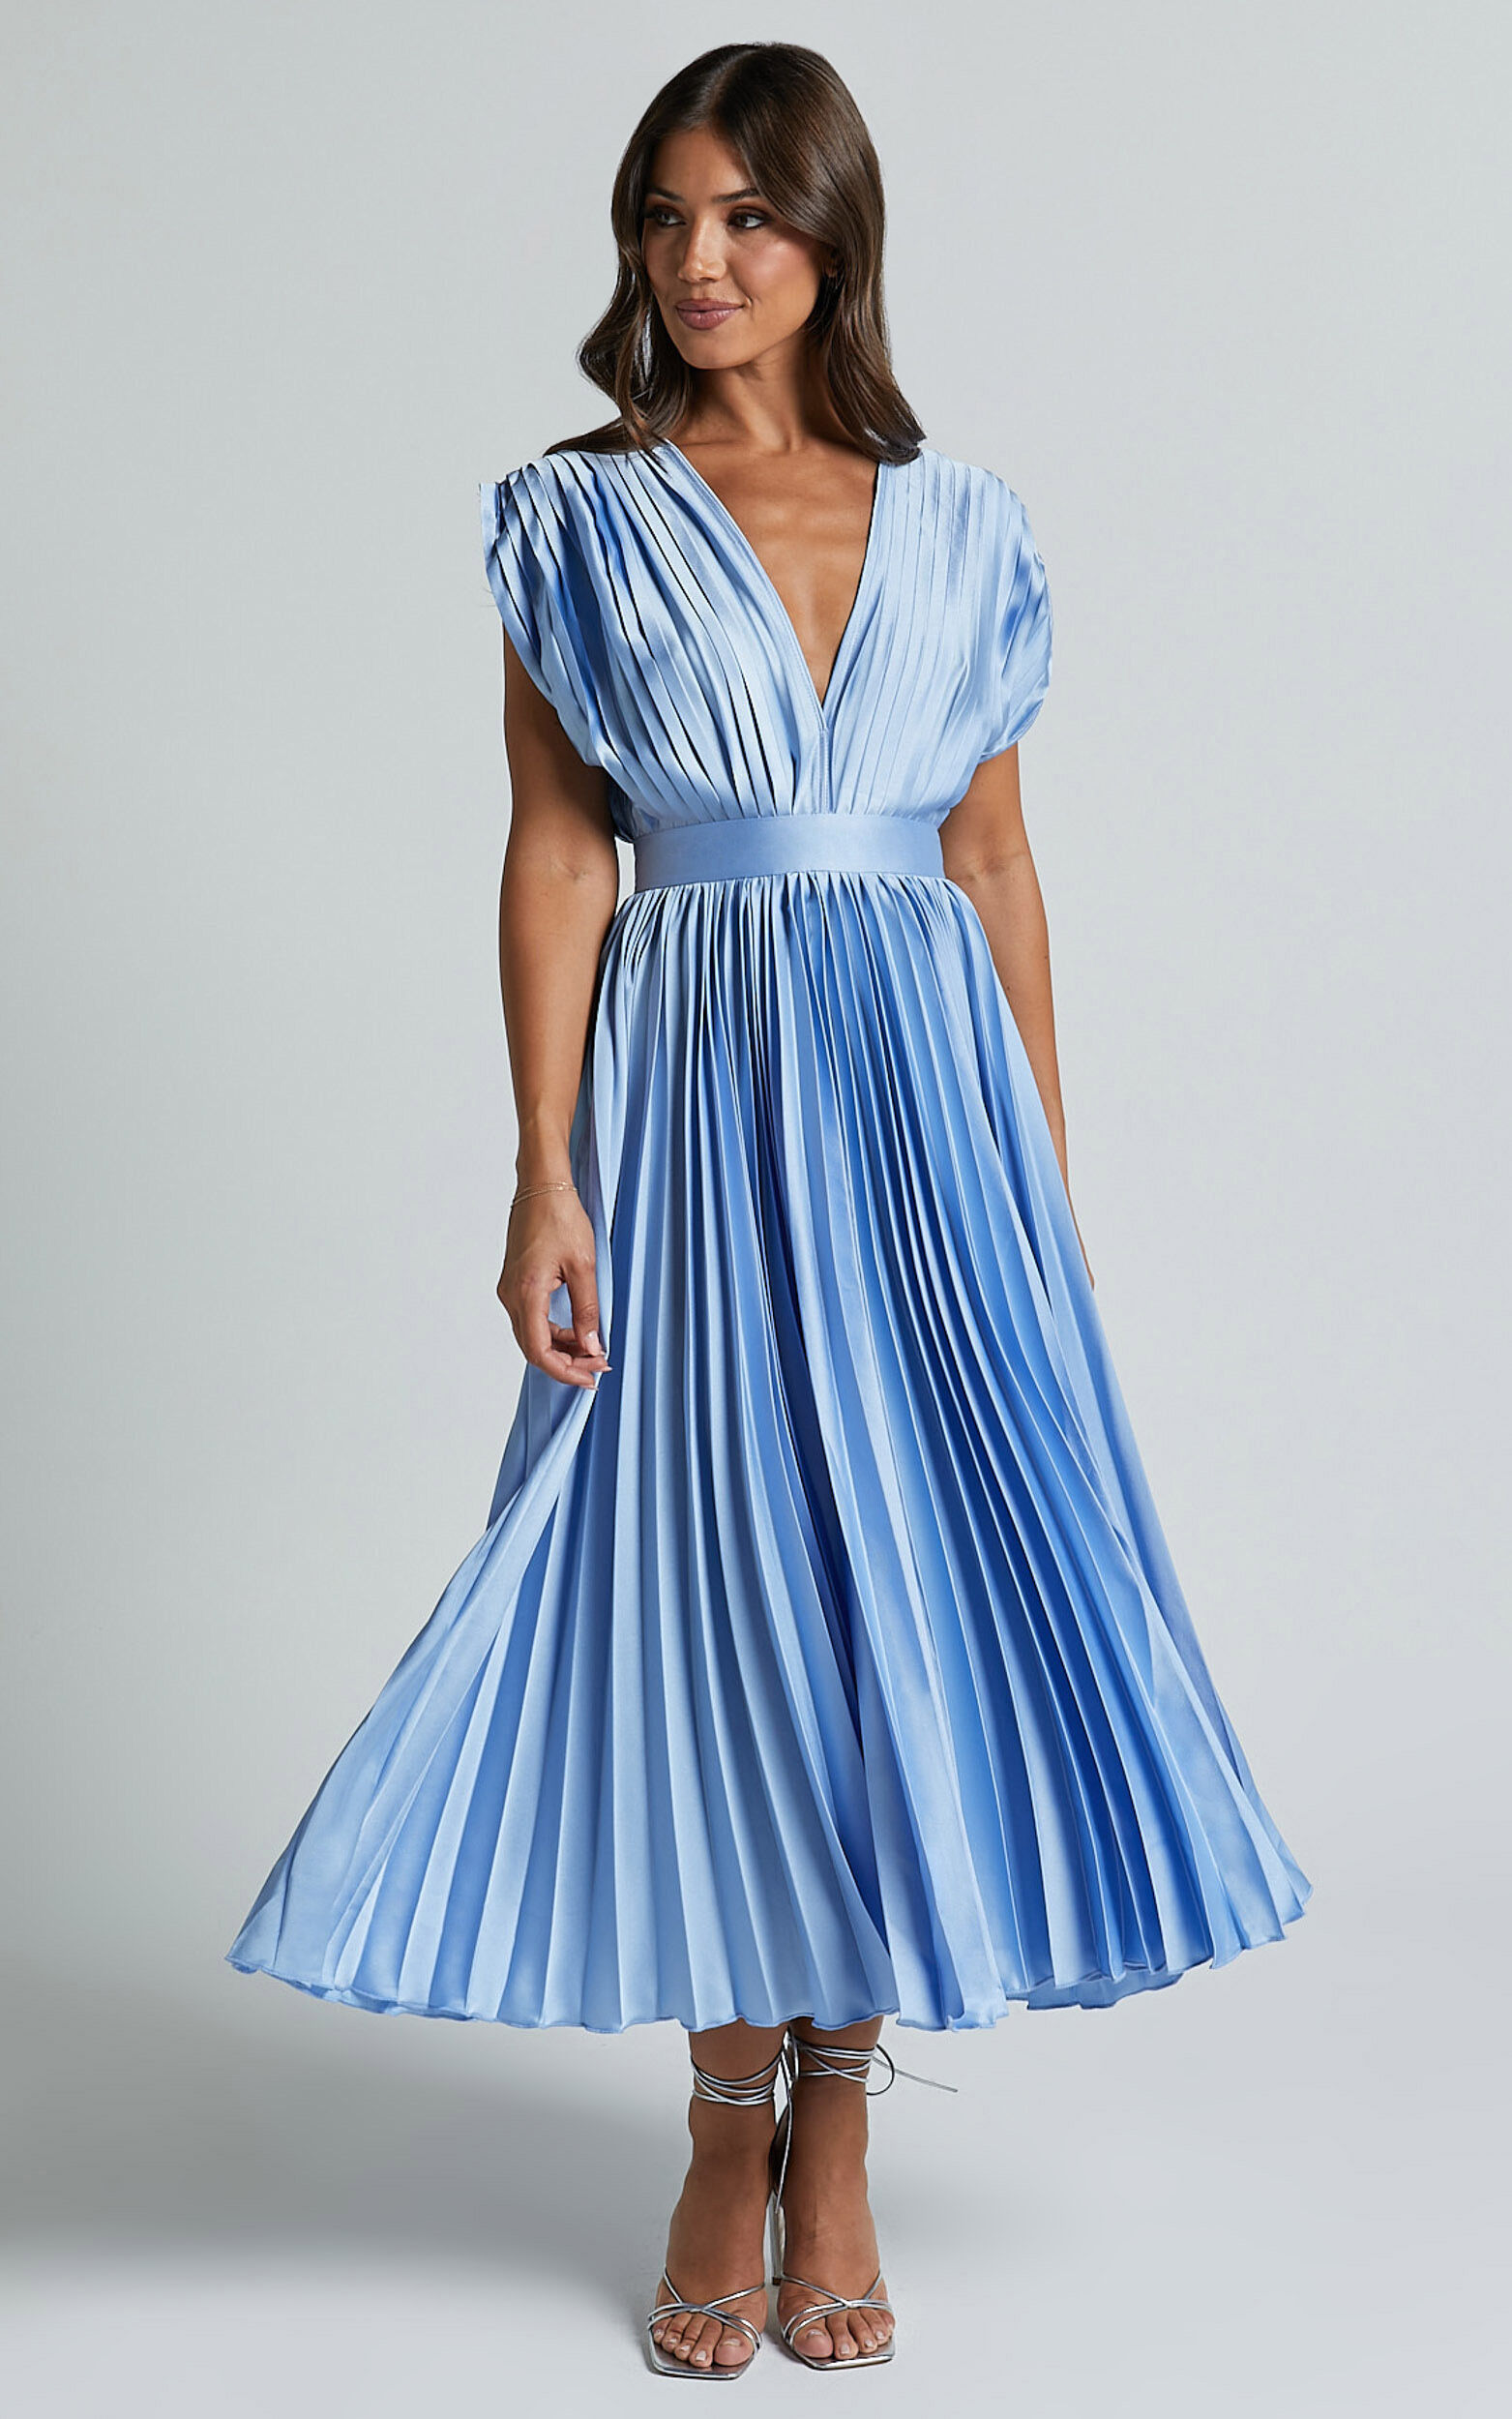 Della Midi Dress - Plunge Neck Short Sleeve Pleated Dress in Baby Blue - 06, BLU1